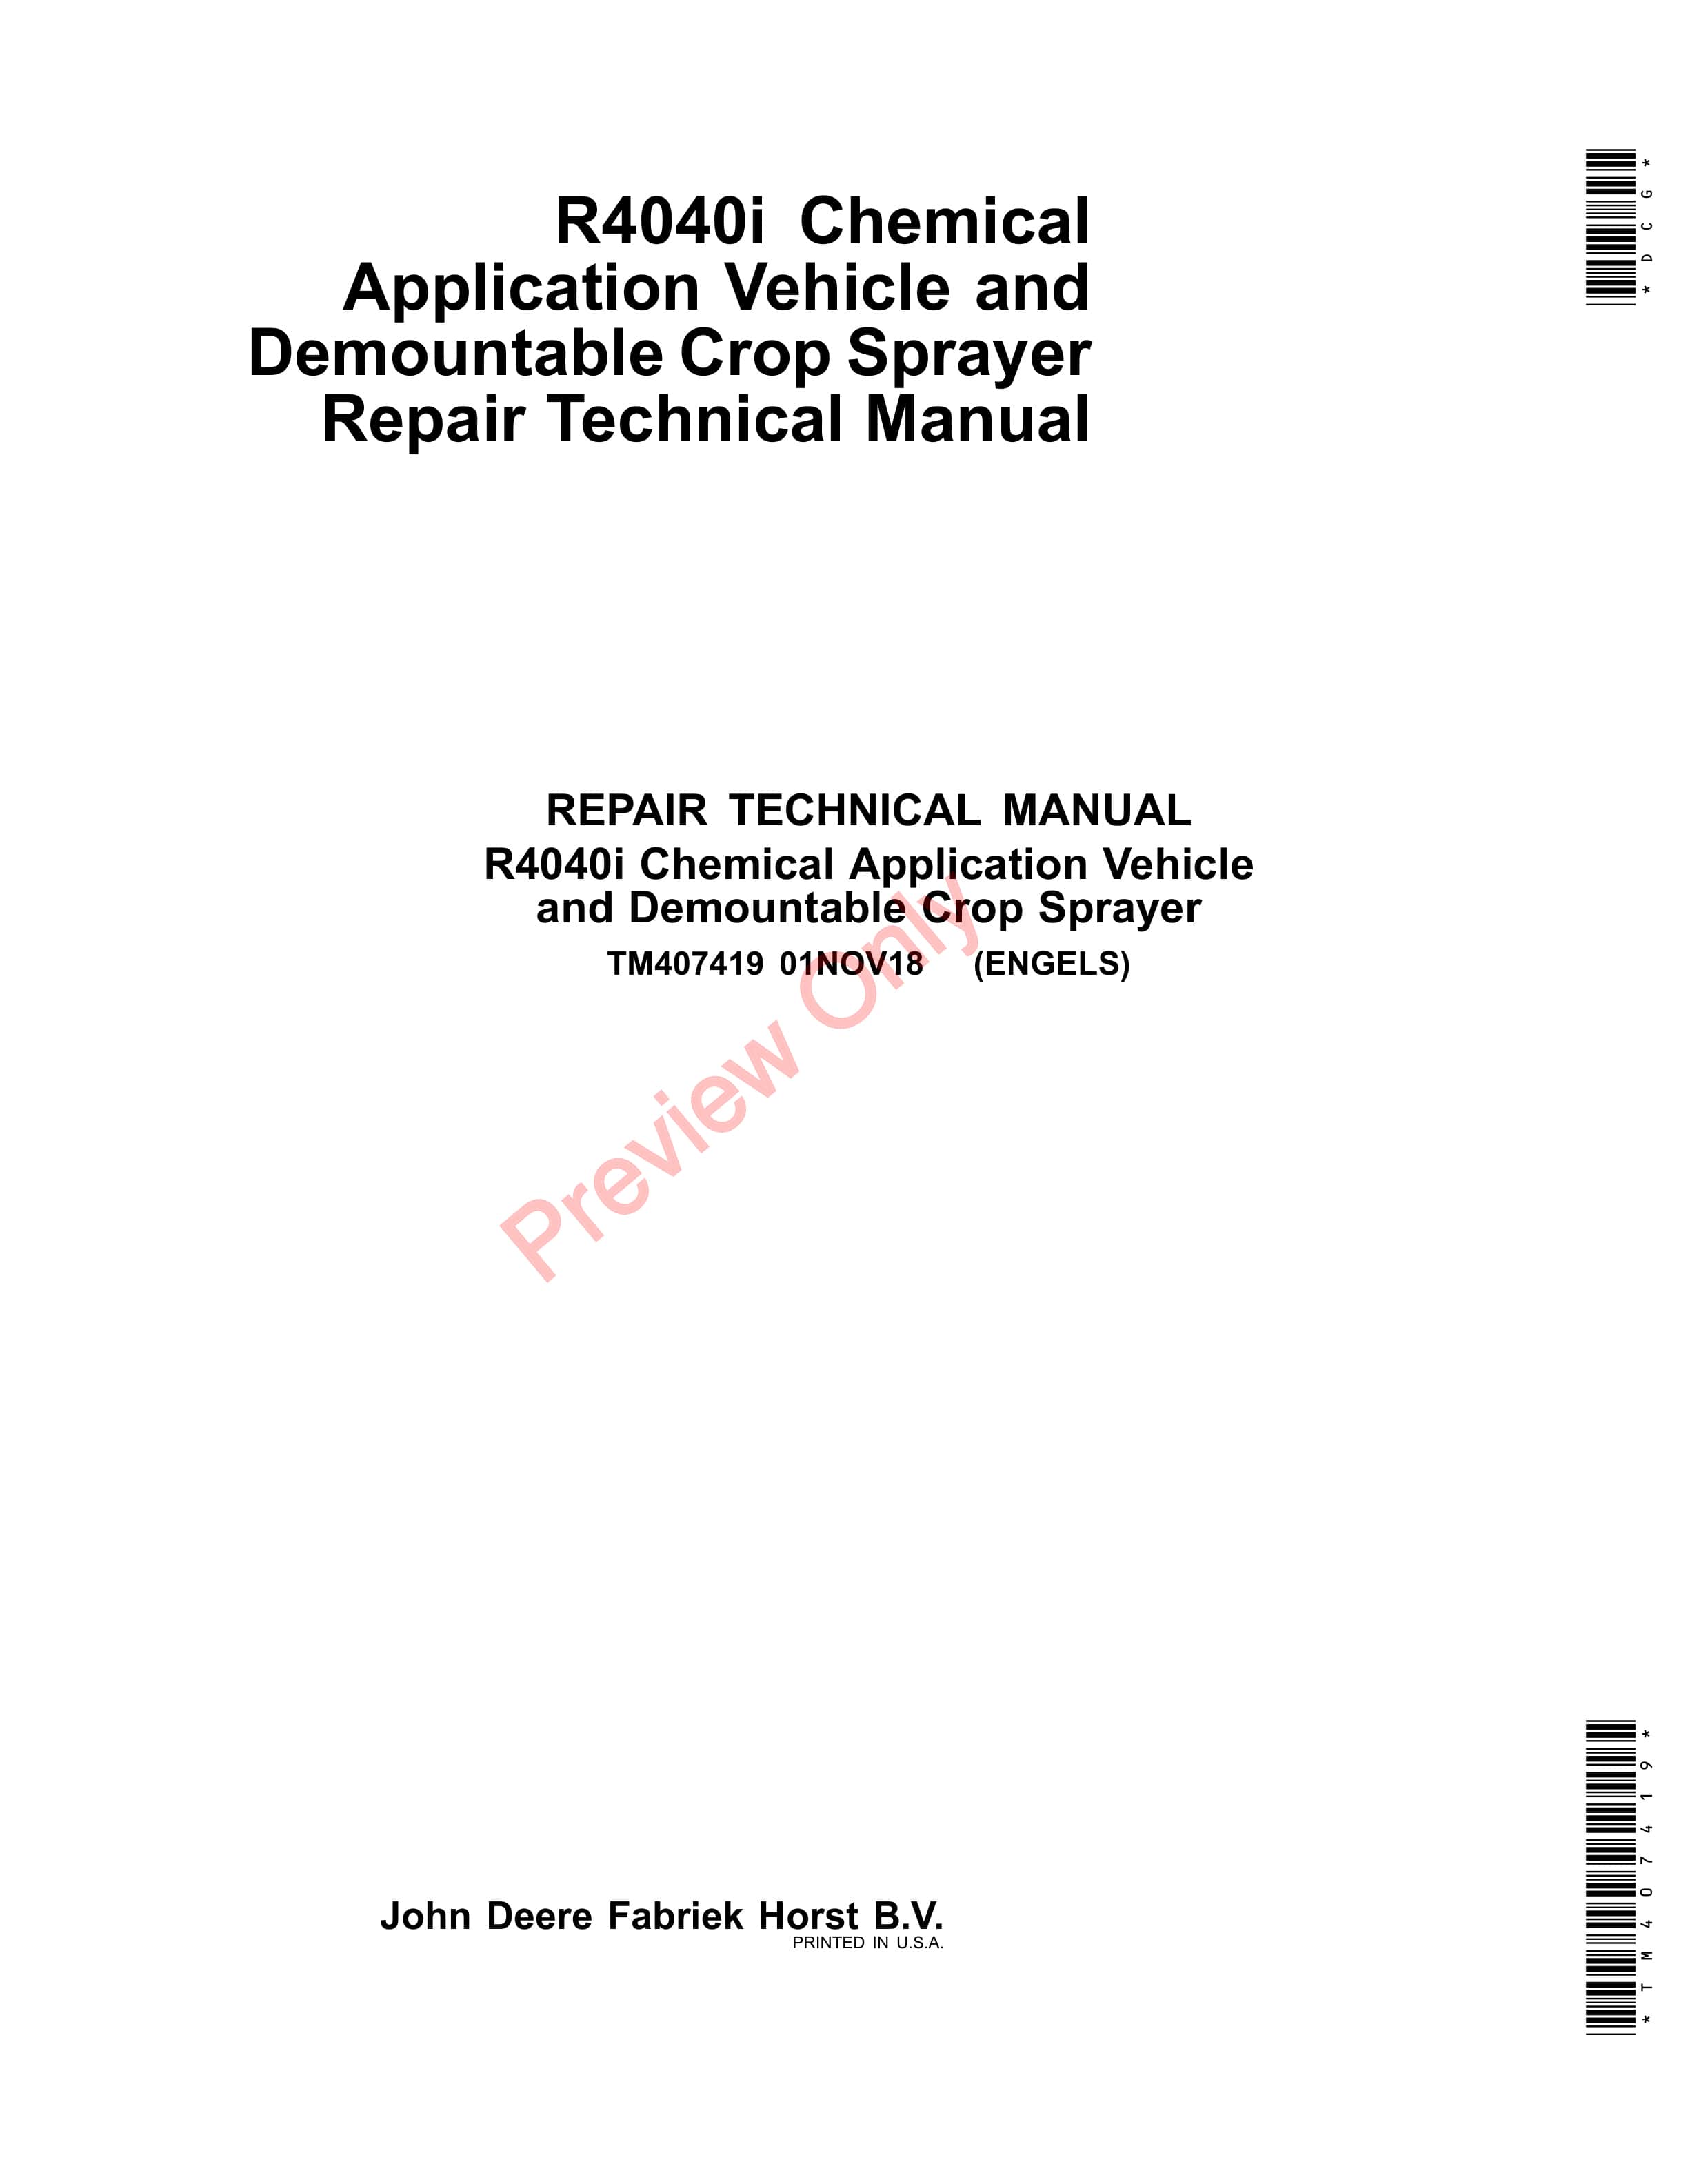 John Deere R4040i Chemical Application Vehicle and Demountable Crop Sprayers Repair Technical Manual TM407419 01NOV18 1